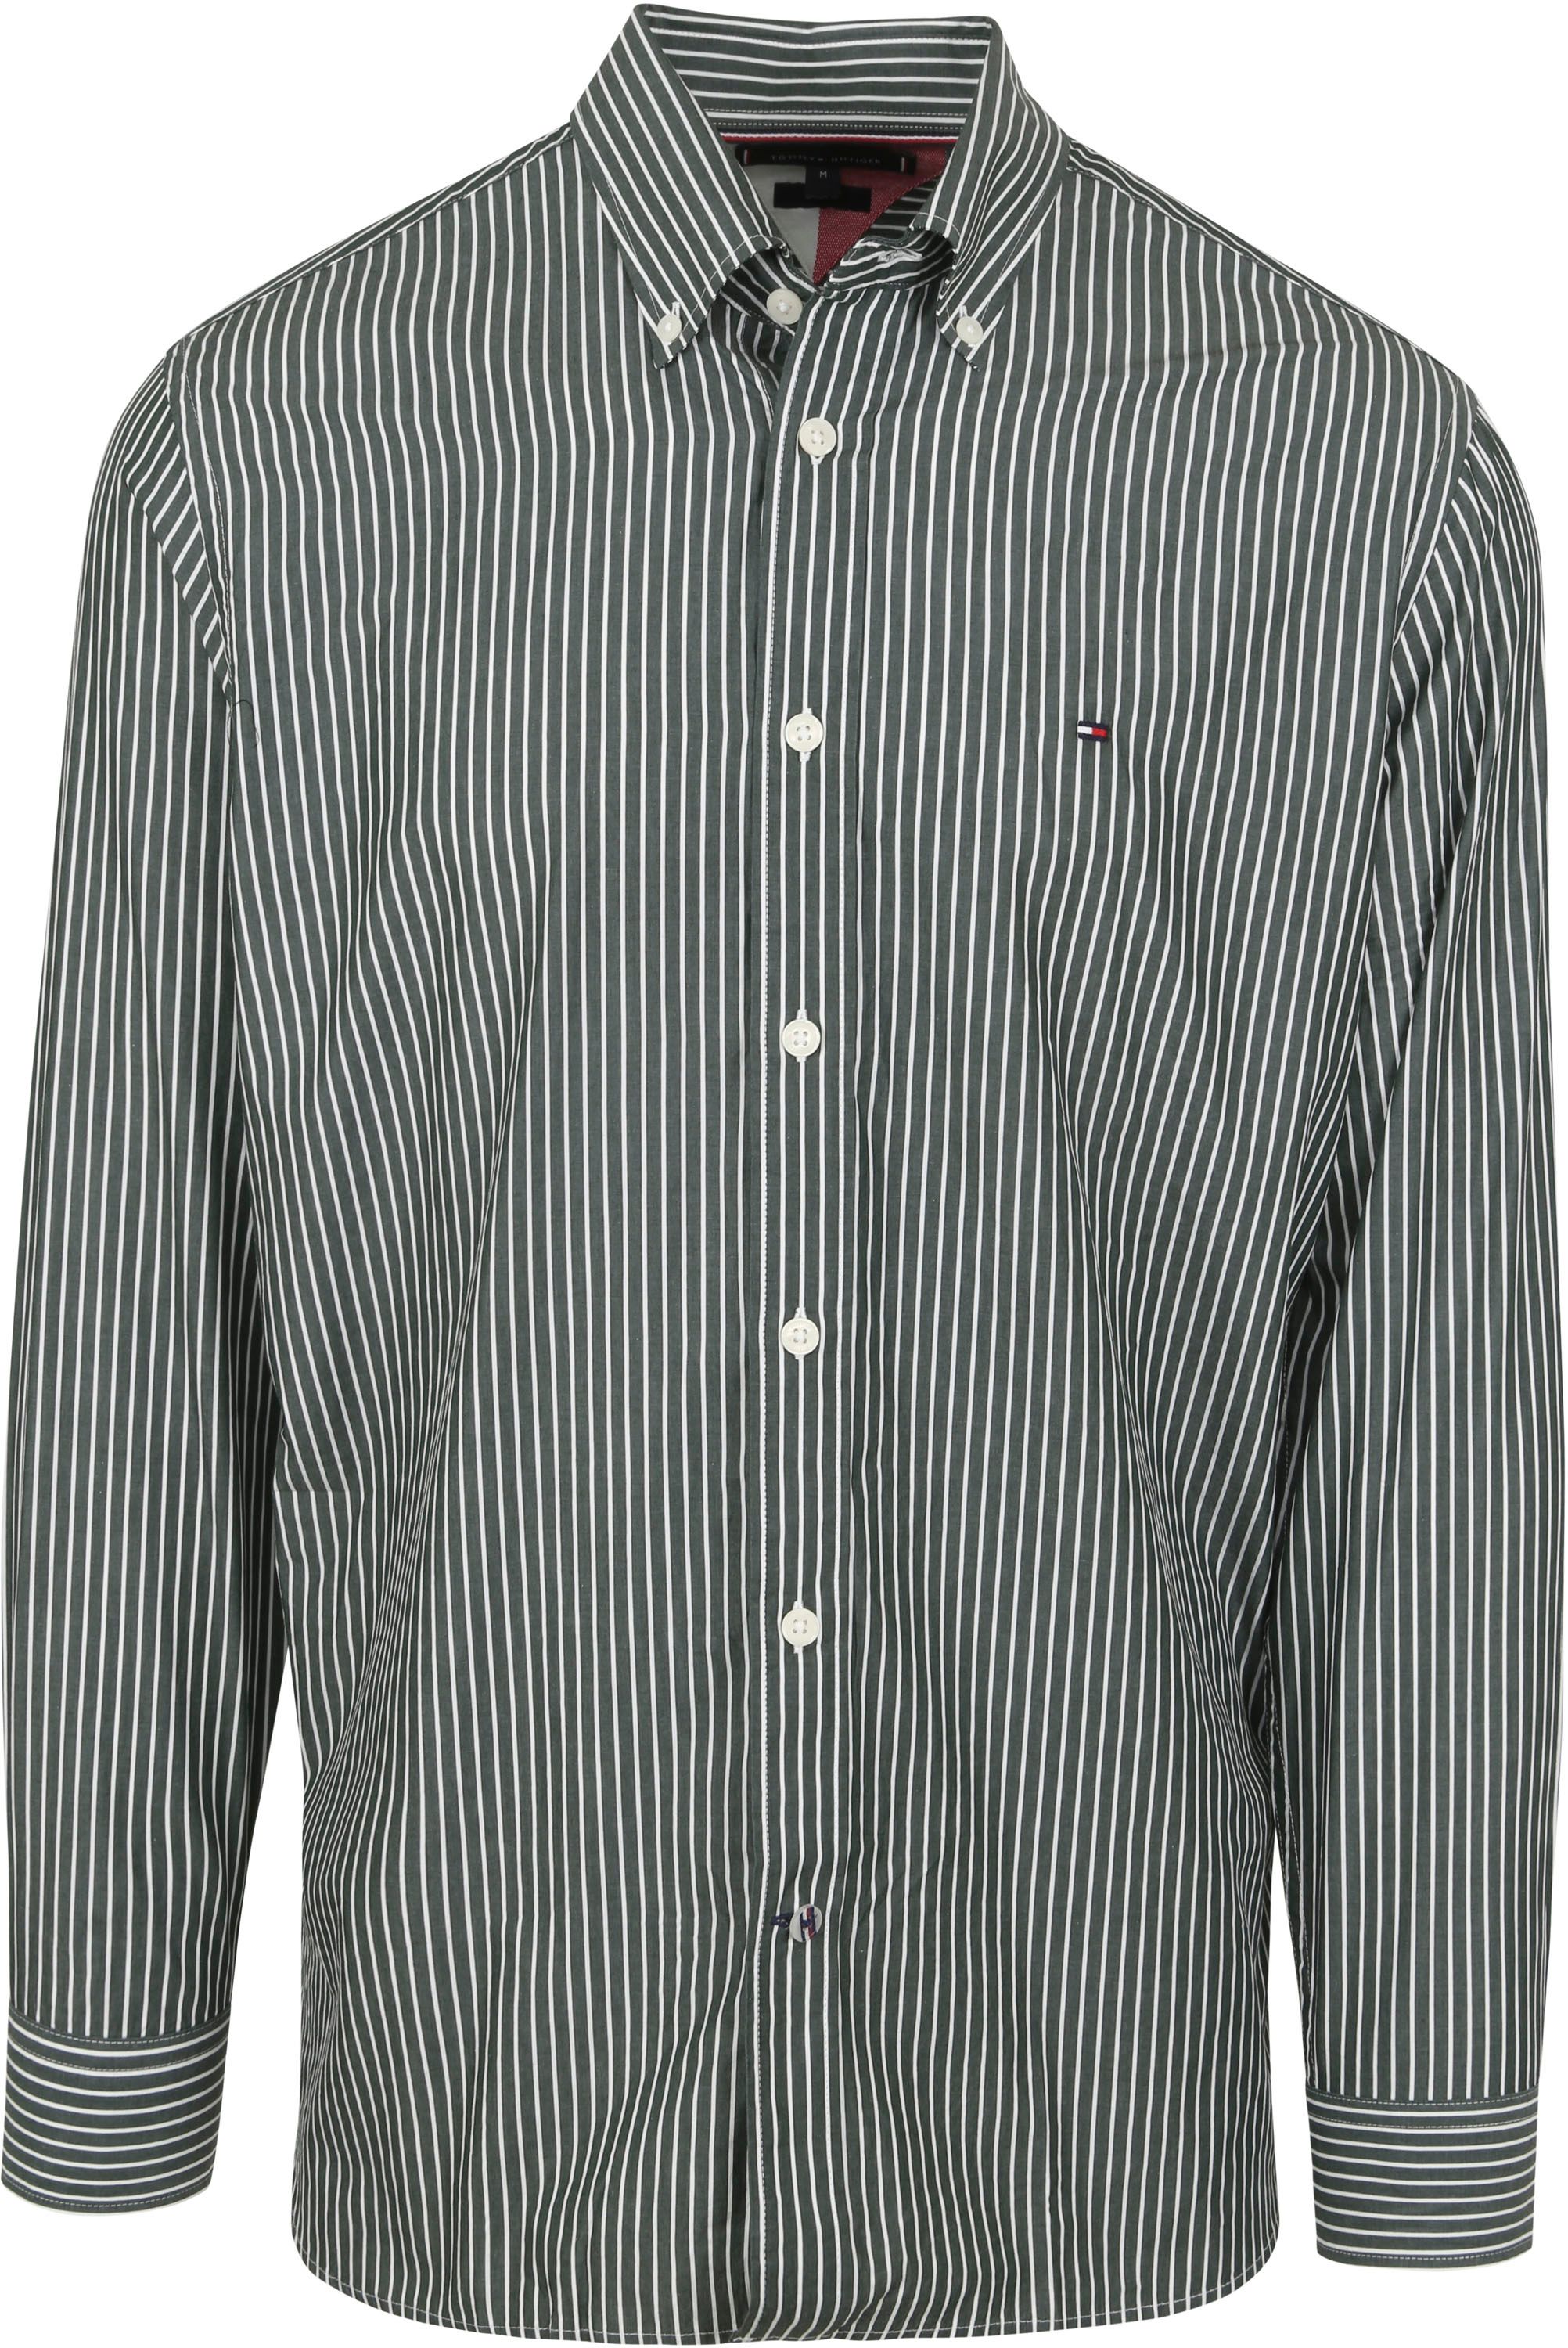 Tommy Hilfiger Shirt Stripe  Green size L